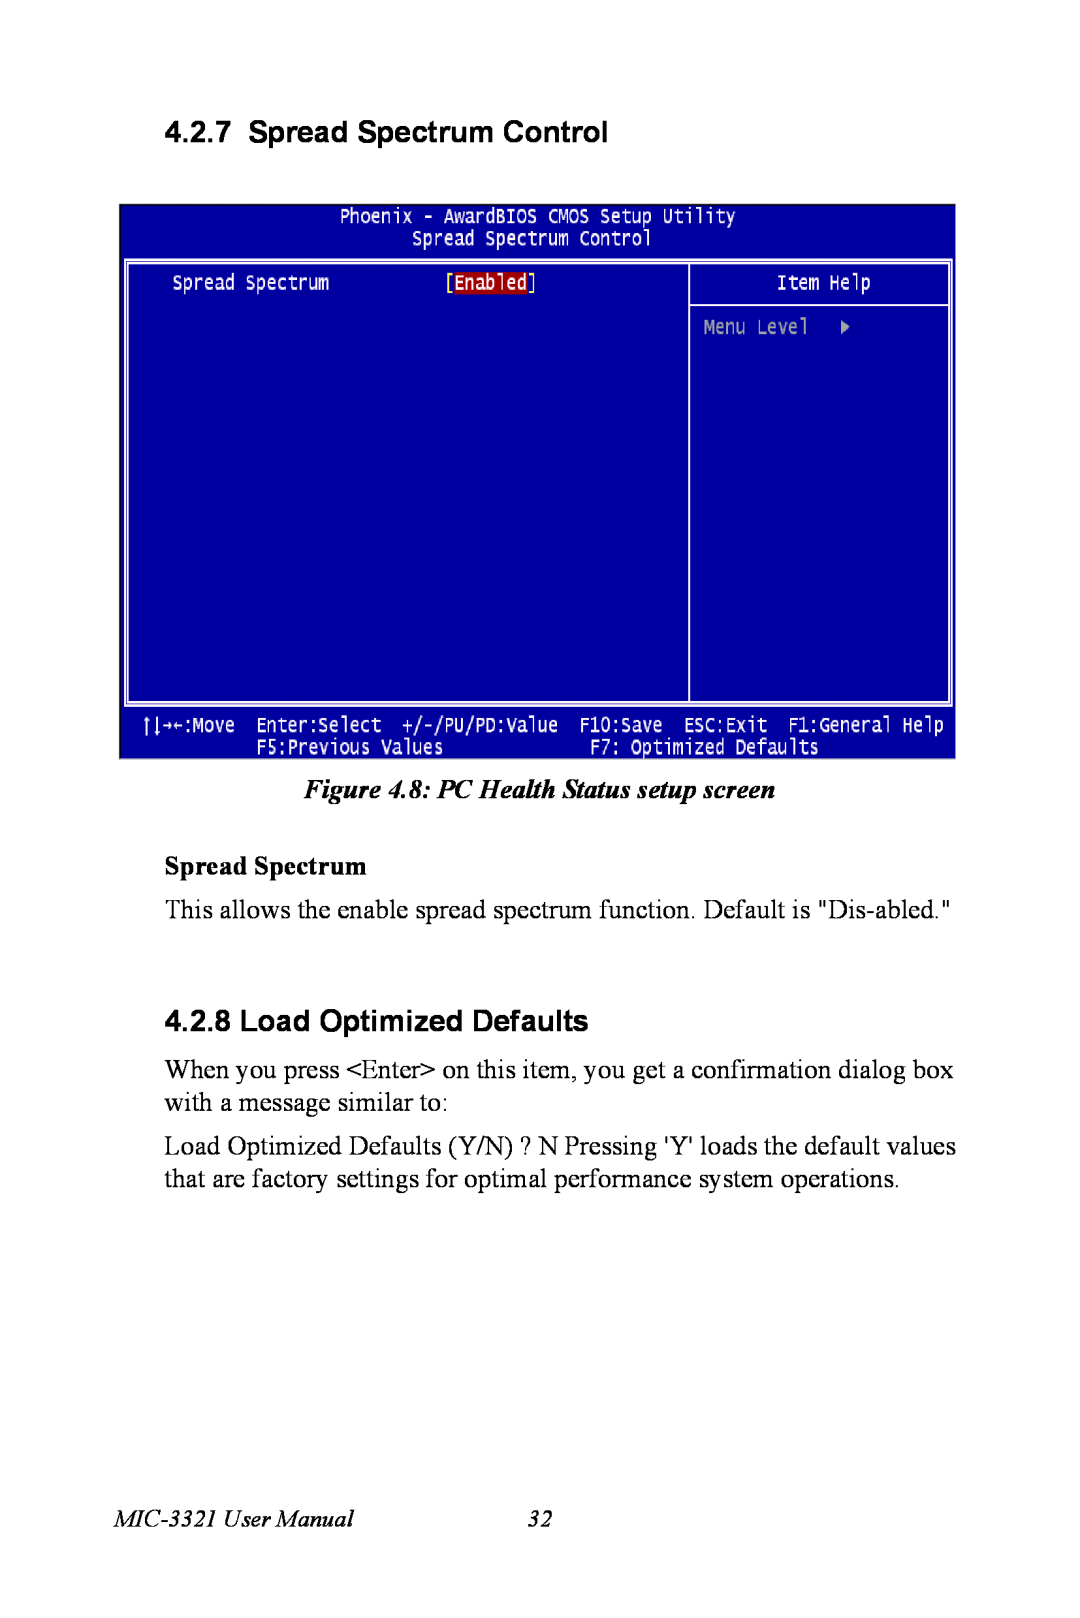 Intel MIC-3321, 3U Compact PCI Spread Spectrum Control, Load Optimized Defaults, 8: PC Health Status setup screen 